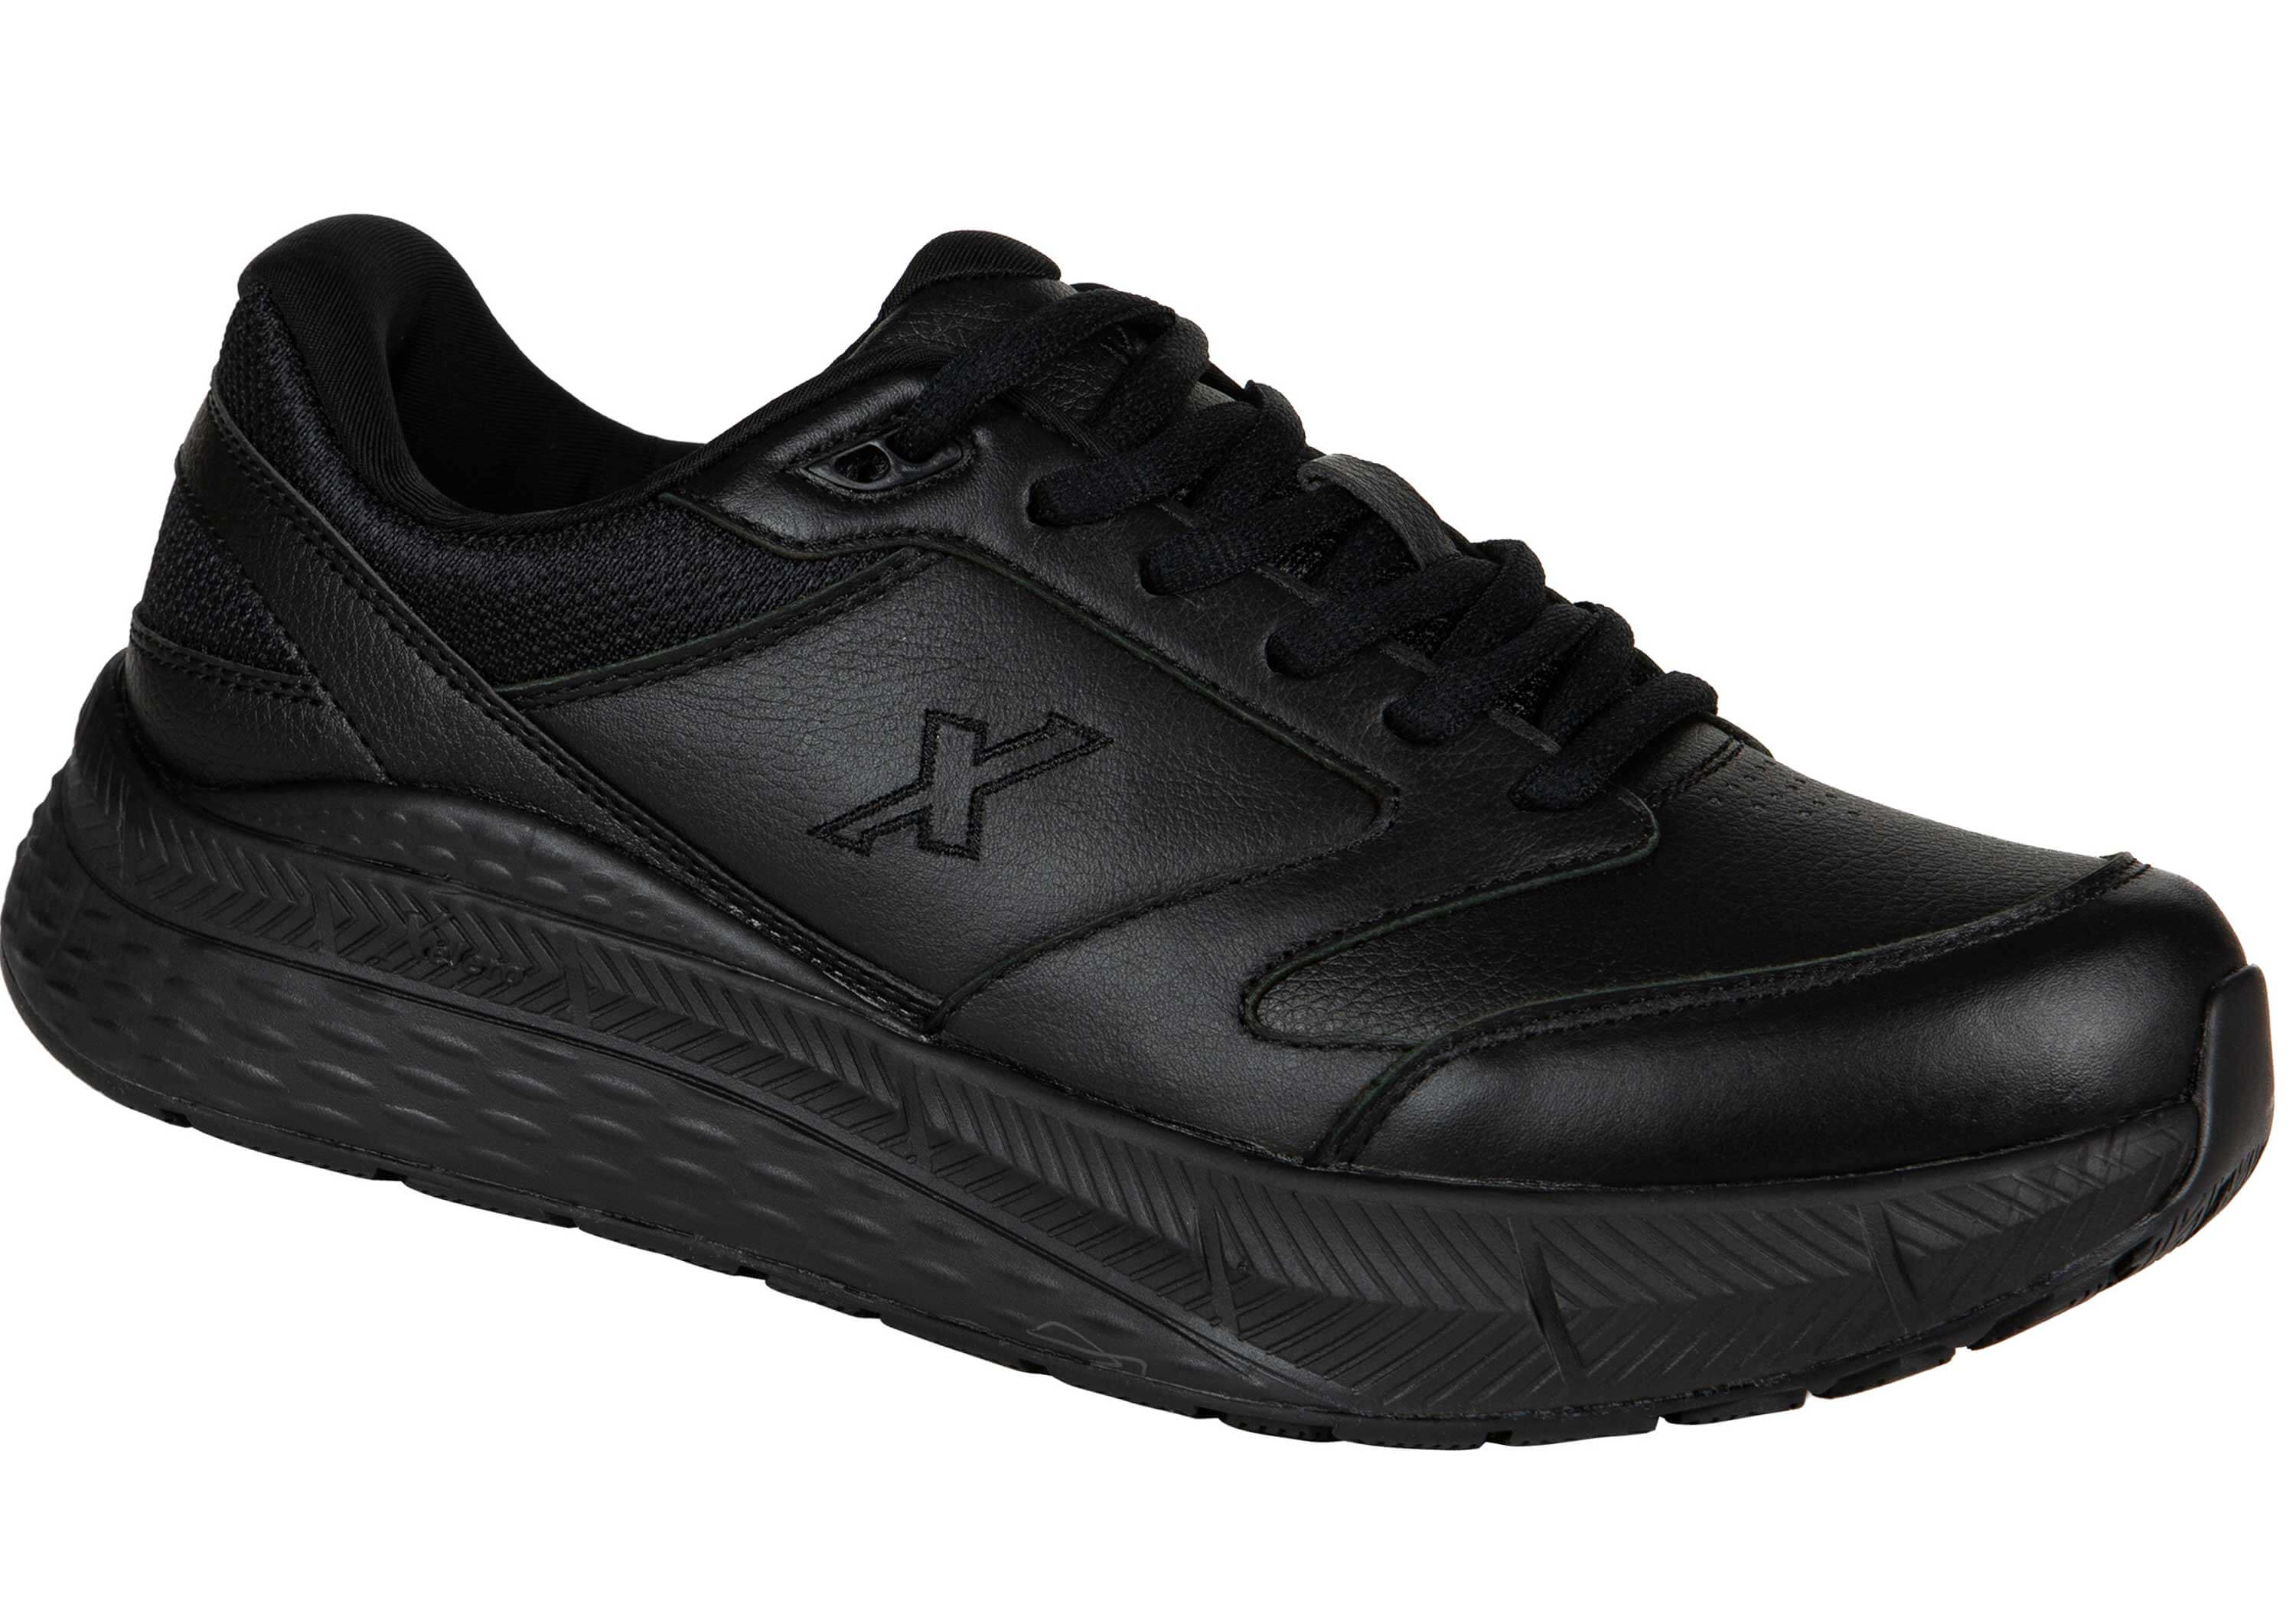 Xelero Shoes Steadfast X58300 Men's Athletic Shoe - Comfort Orthopedic Diabetic Shoe - Extra Depth For Orthotics - Extra Wide